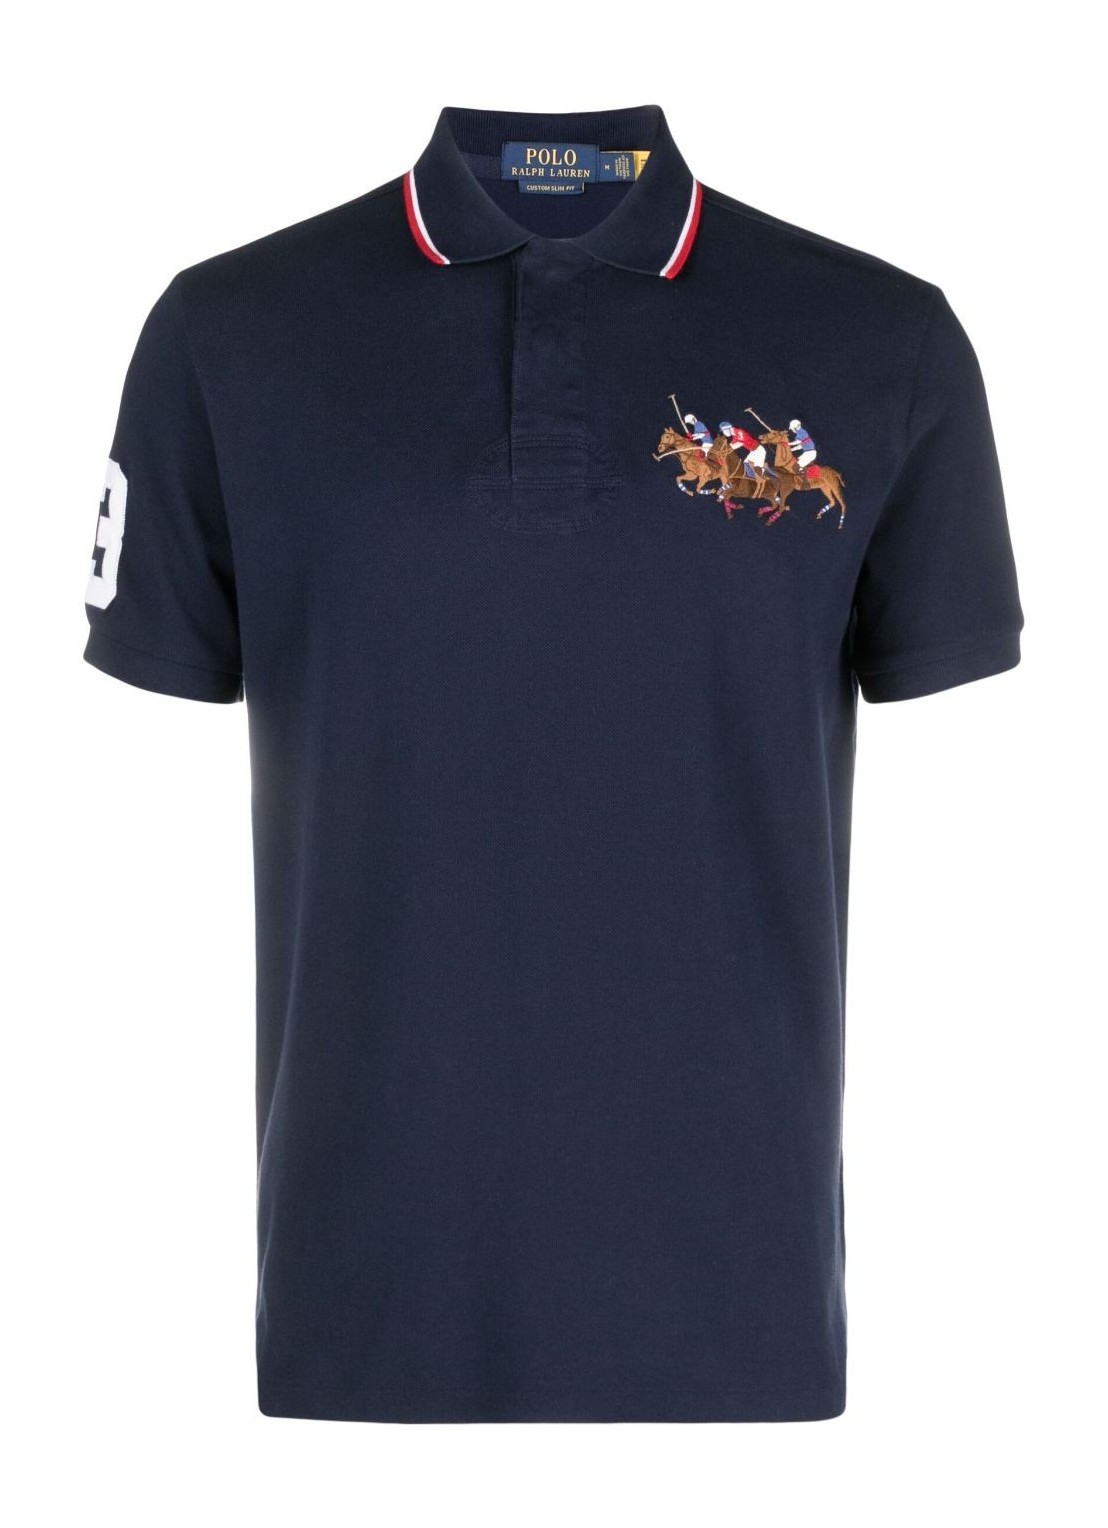 Polo polo ralph lauren sskccmslm11-short sleeve-polo shirt - 710900614006 cruise navy talla XL
 